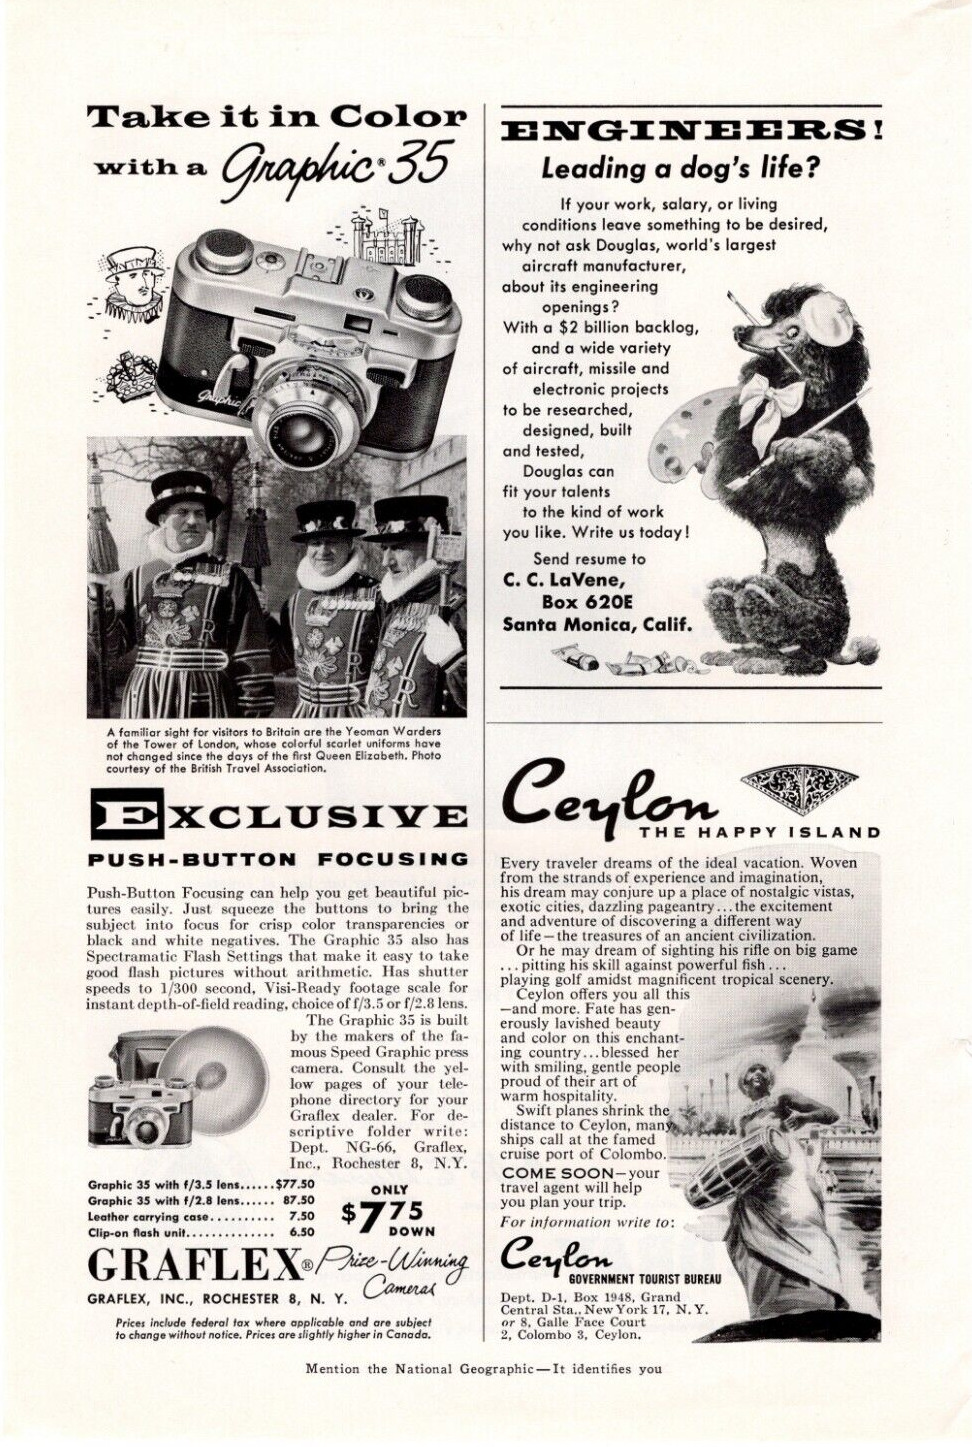 GRAFLEX Camera Company 1956 Half Page Magazine Print Advertising